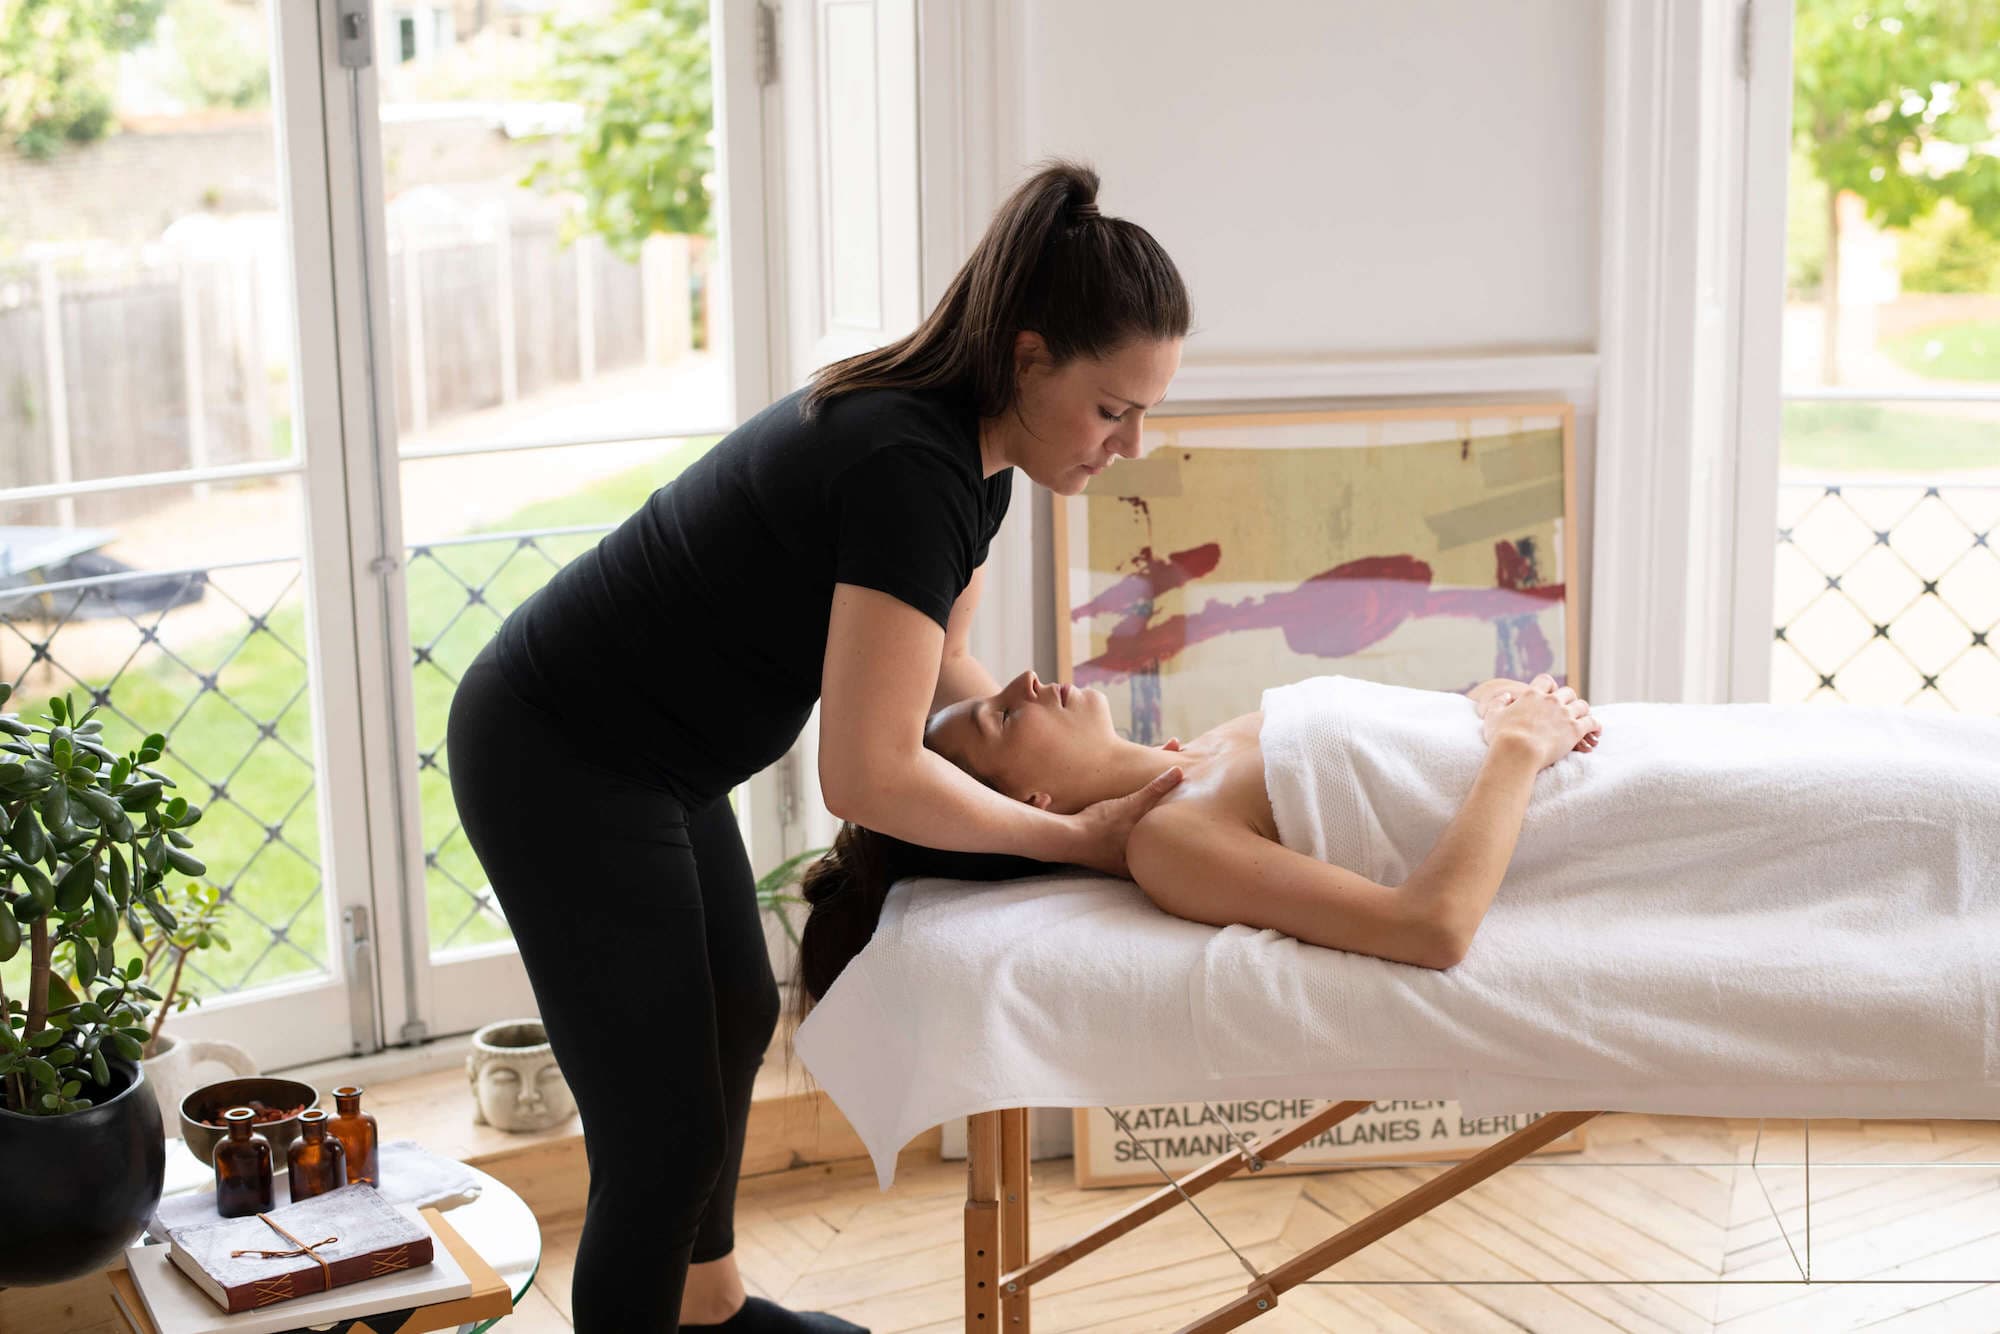 Client enjoys full body massage as therapist massages shoulders